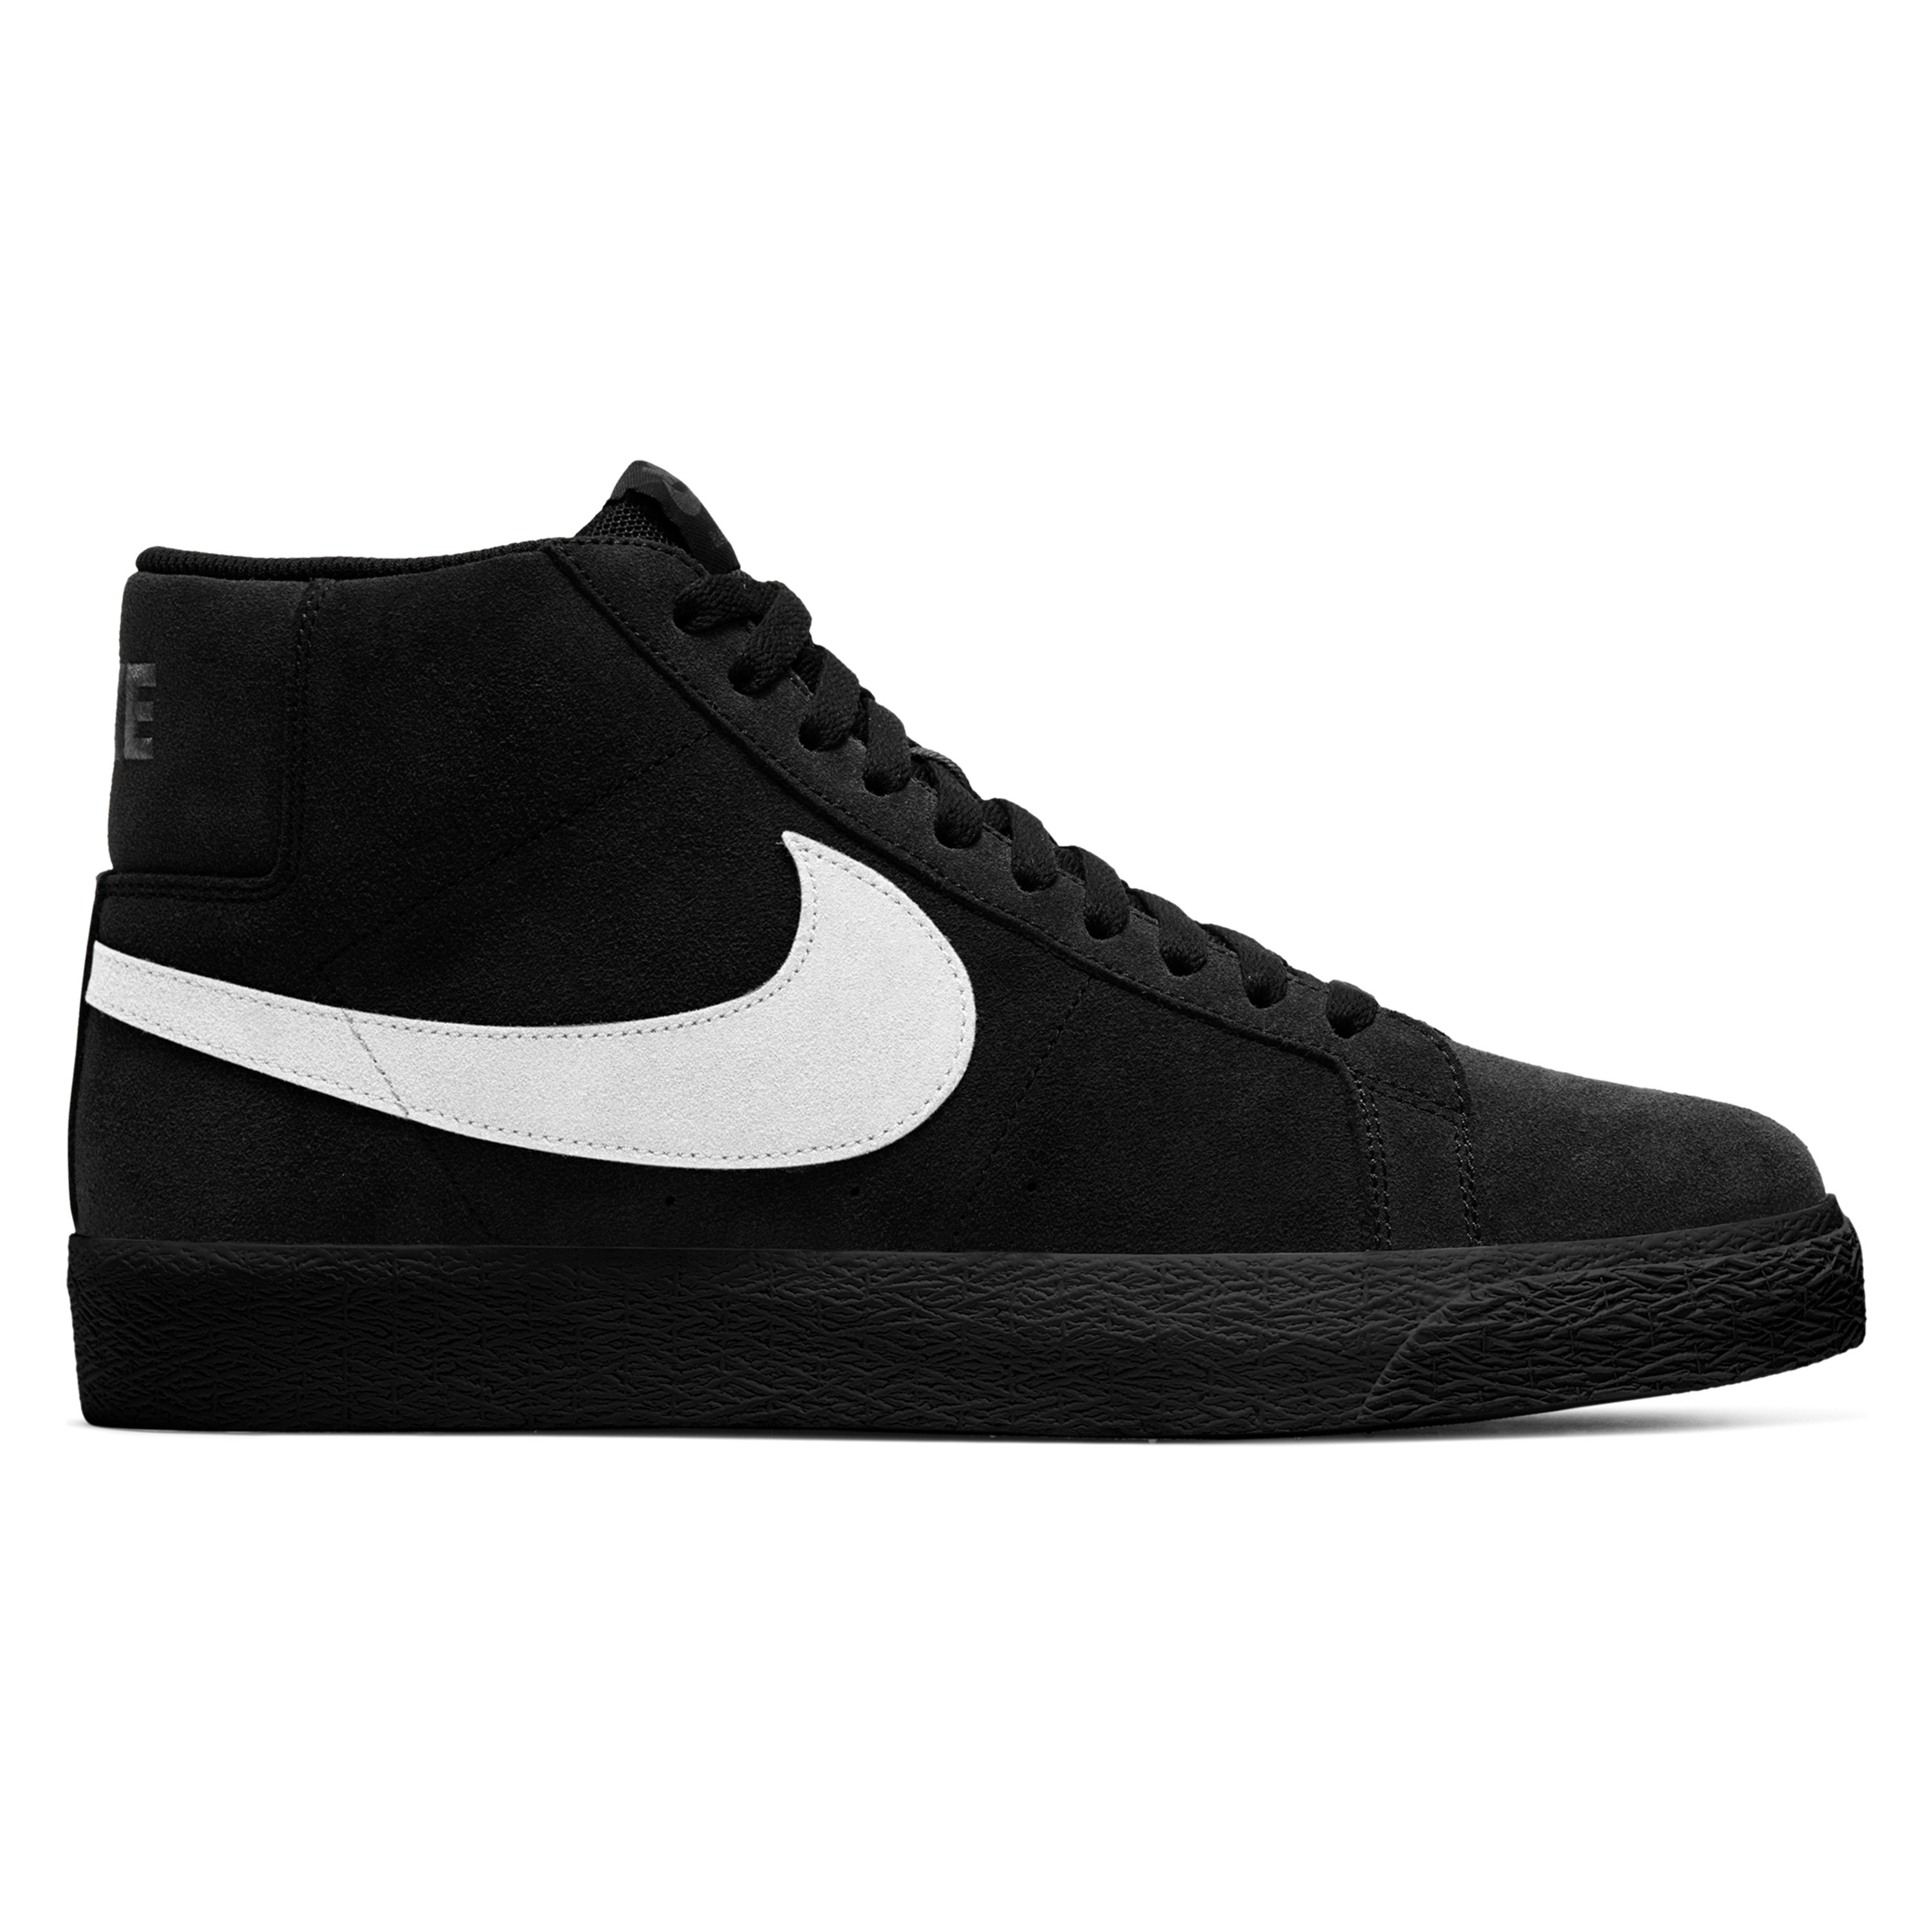 Nike SB Blazer Zoom Mid (Black/White-Black-Black) - 864349-007 - Consortium